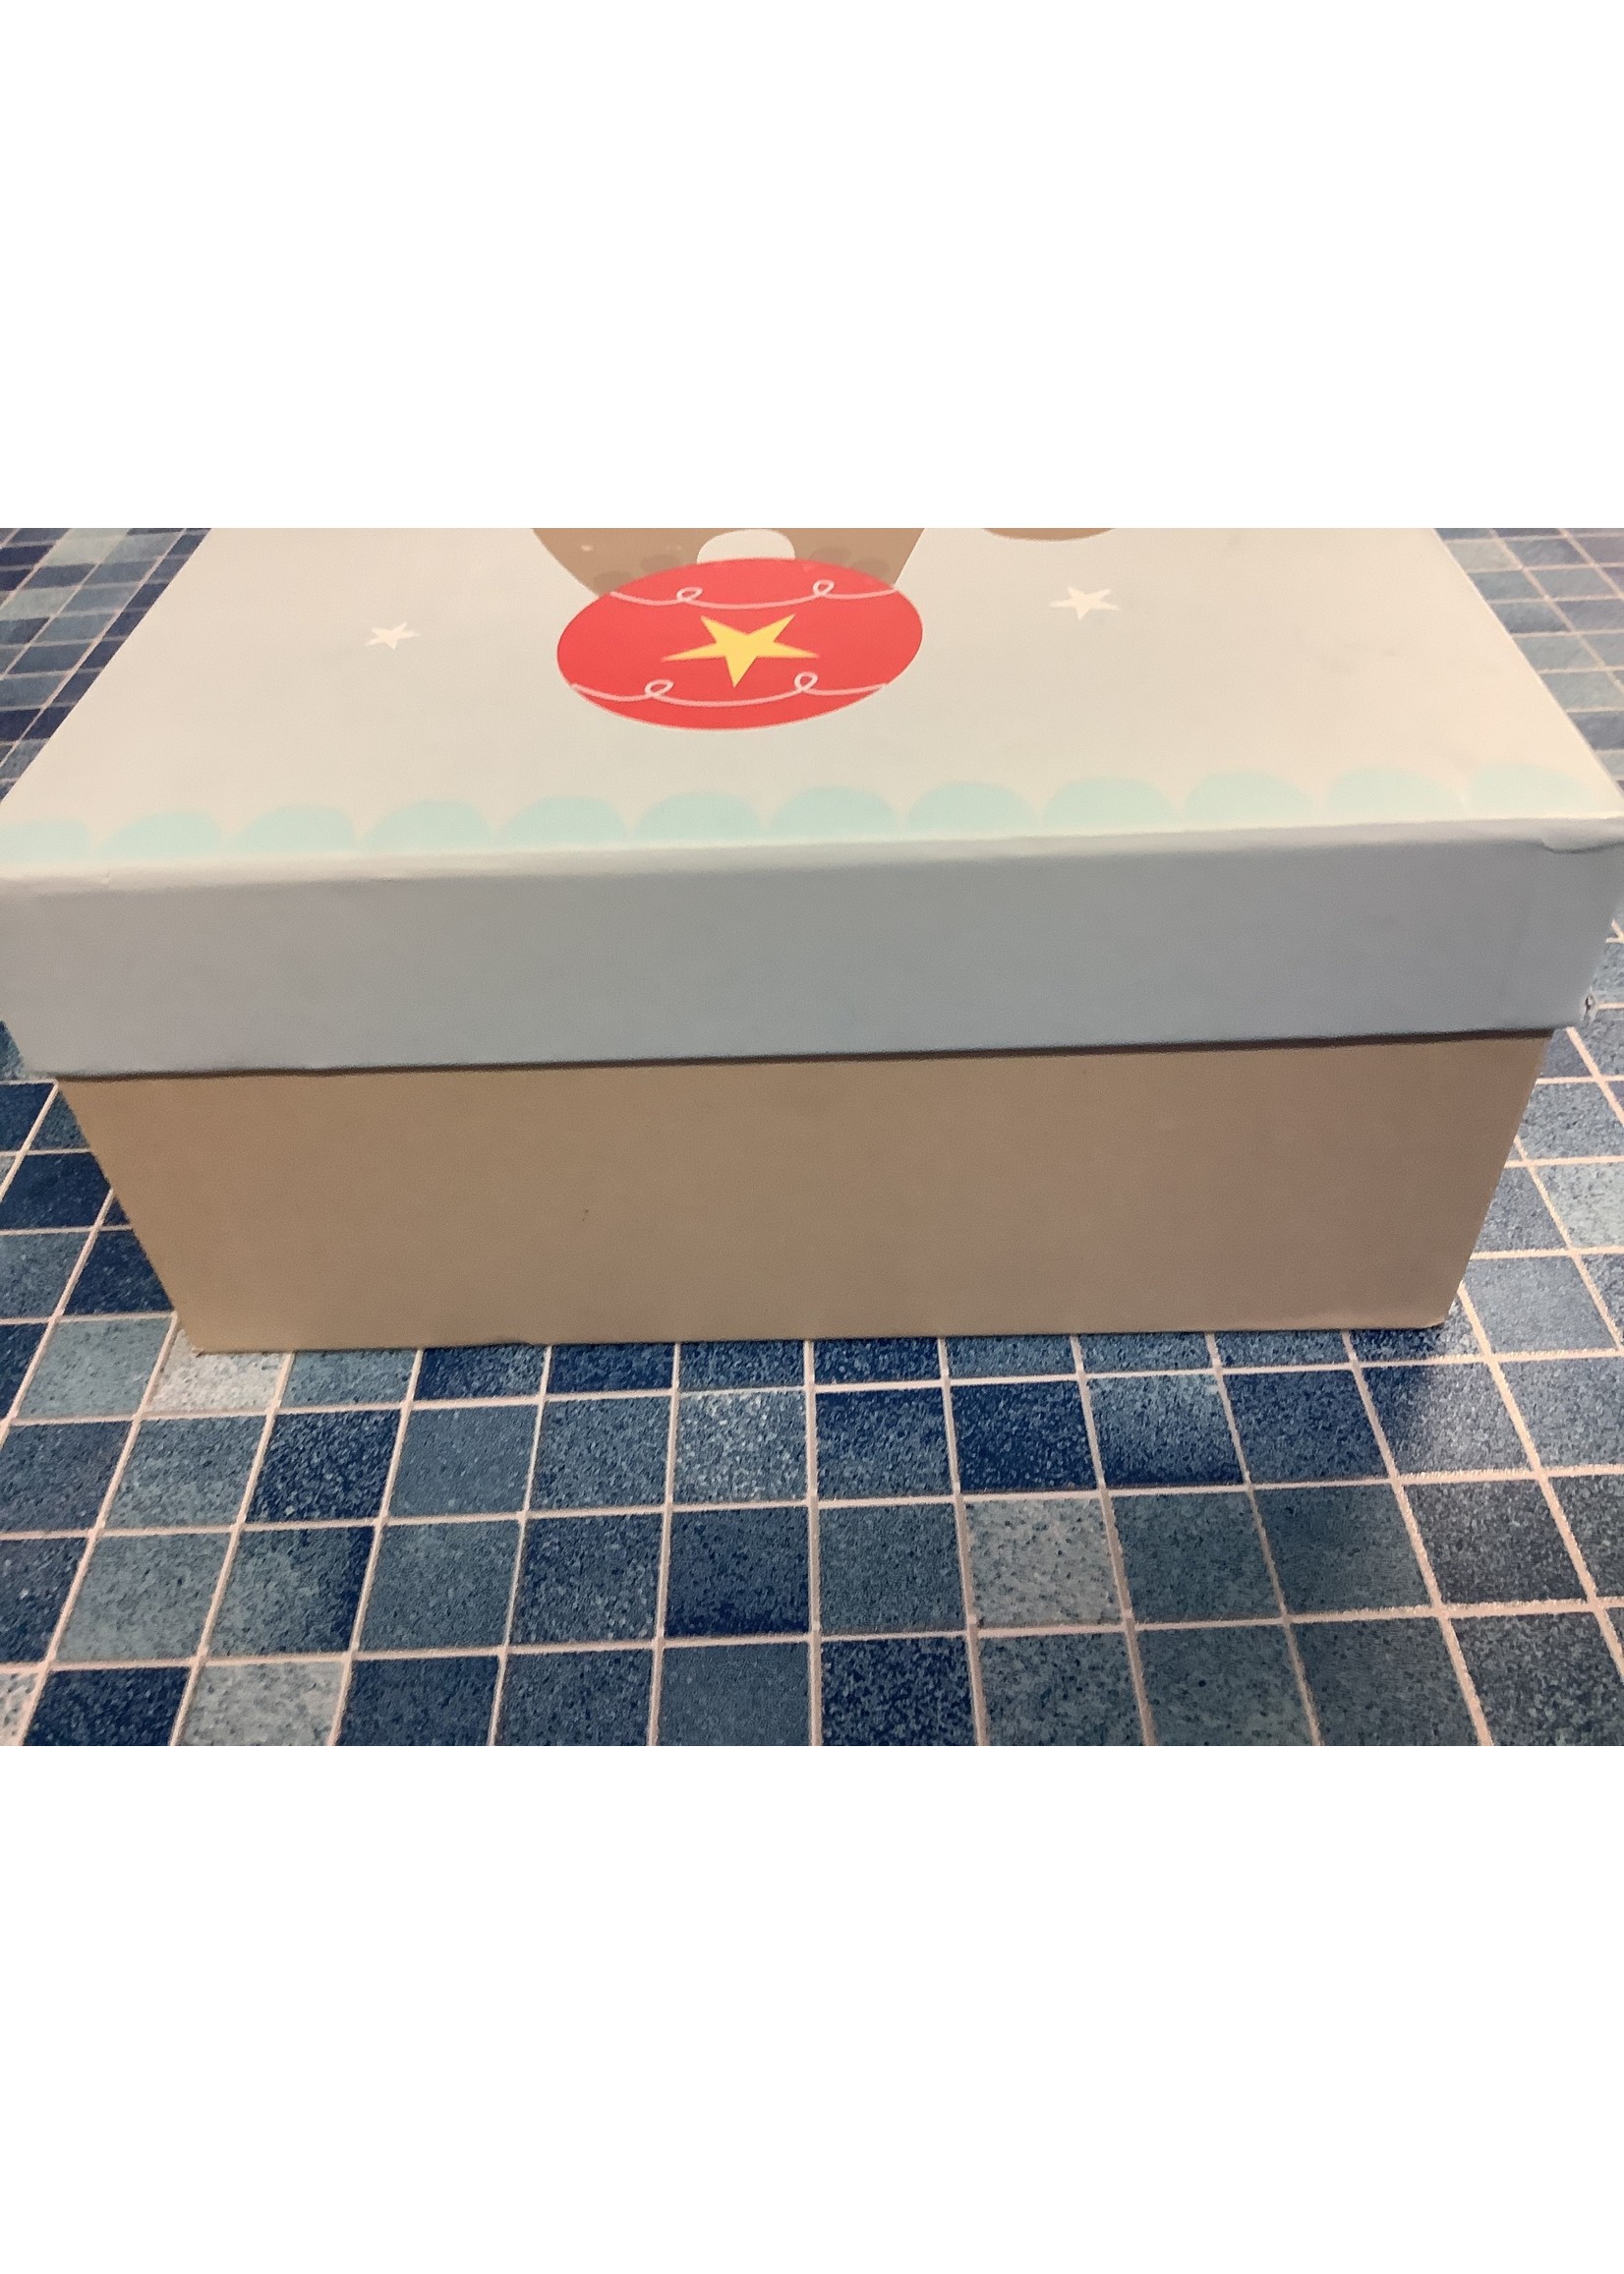 Elephant Circus Baby Shower Gift Box - Spritz